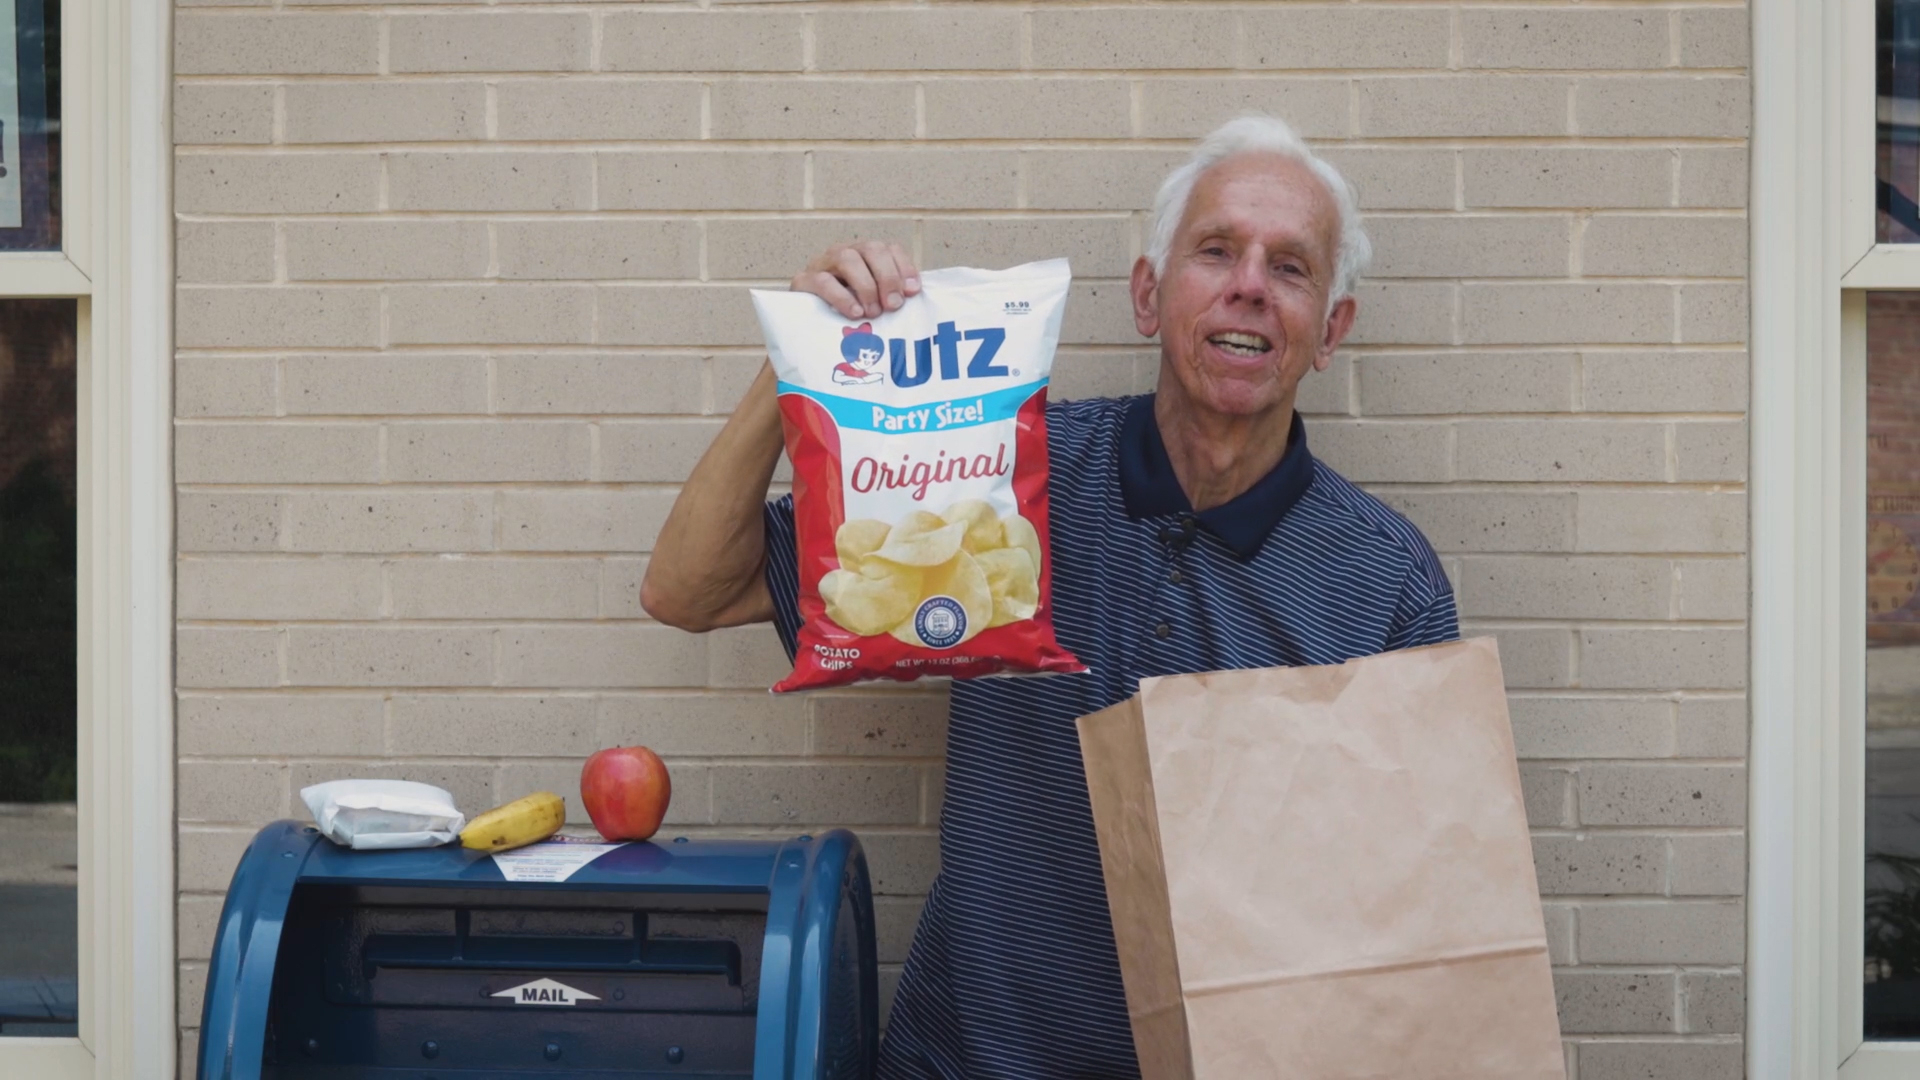 One lucky fan wins Utz snacks for life! Source: Utz Brands, Inc.